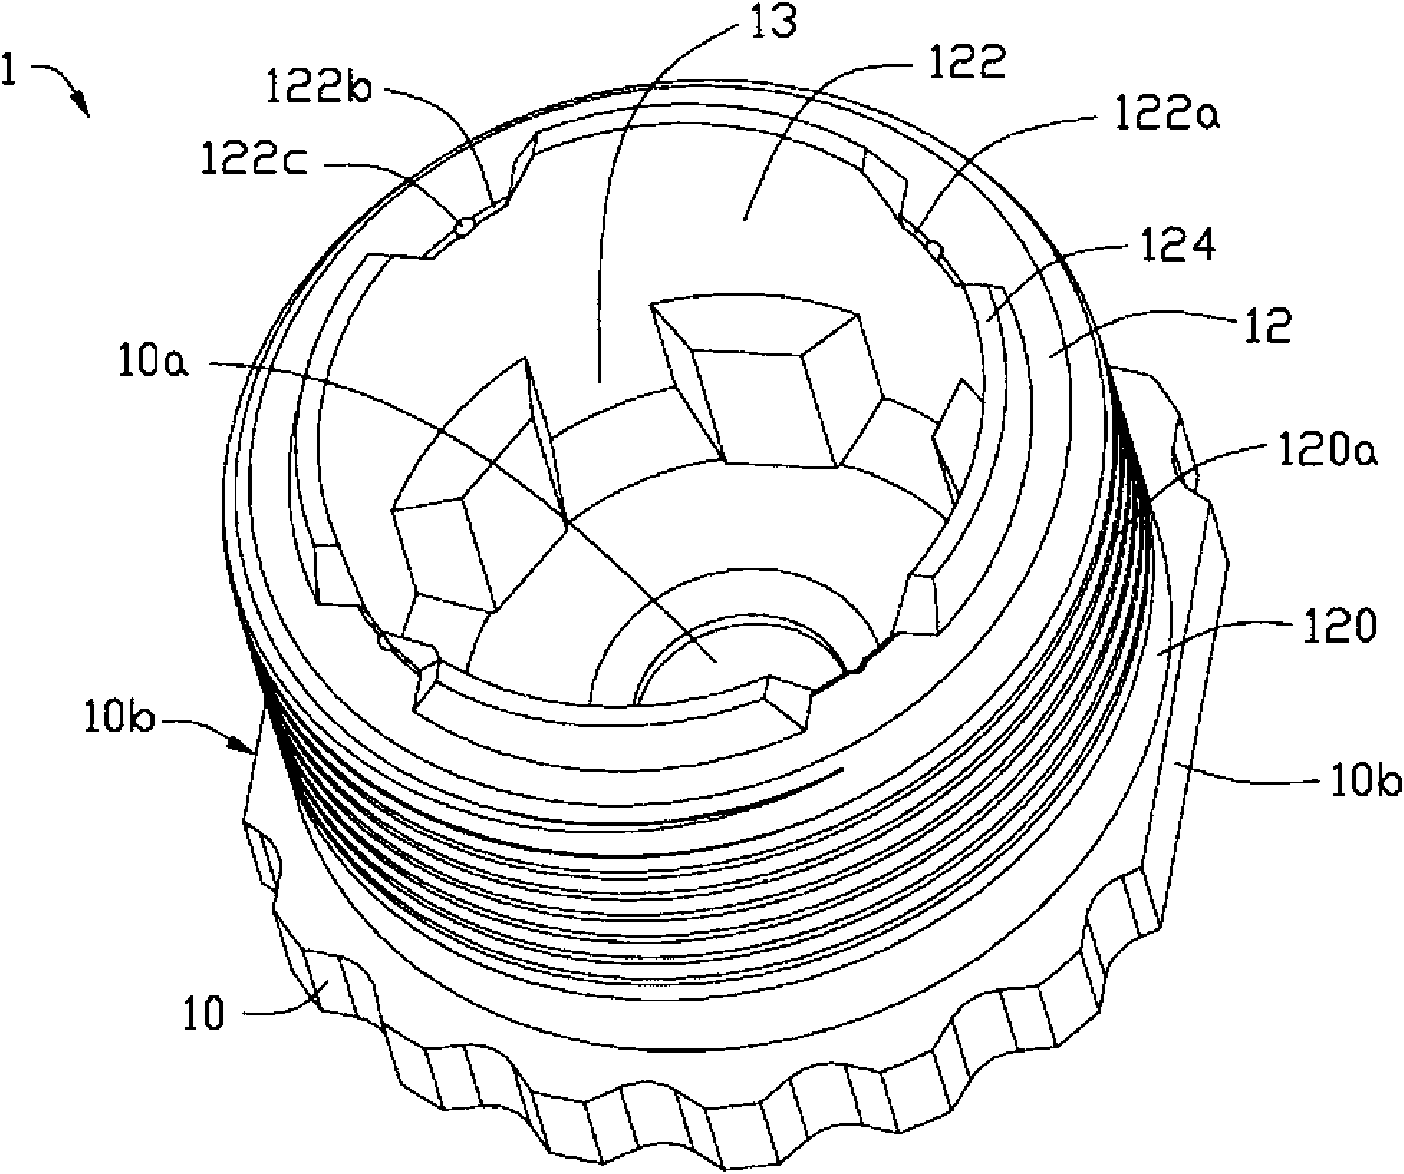 Lens barrel and lens module using same